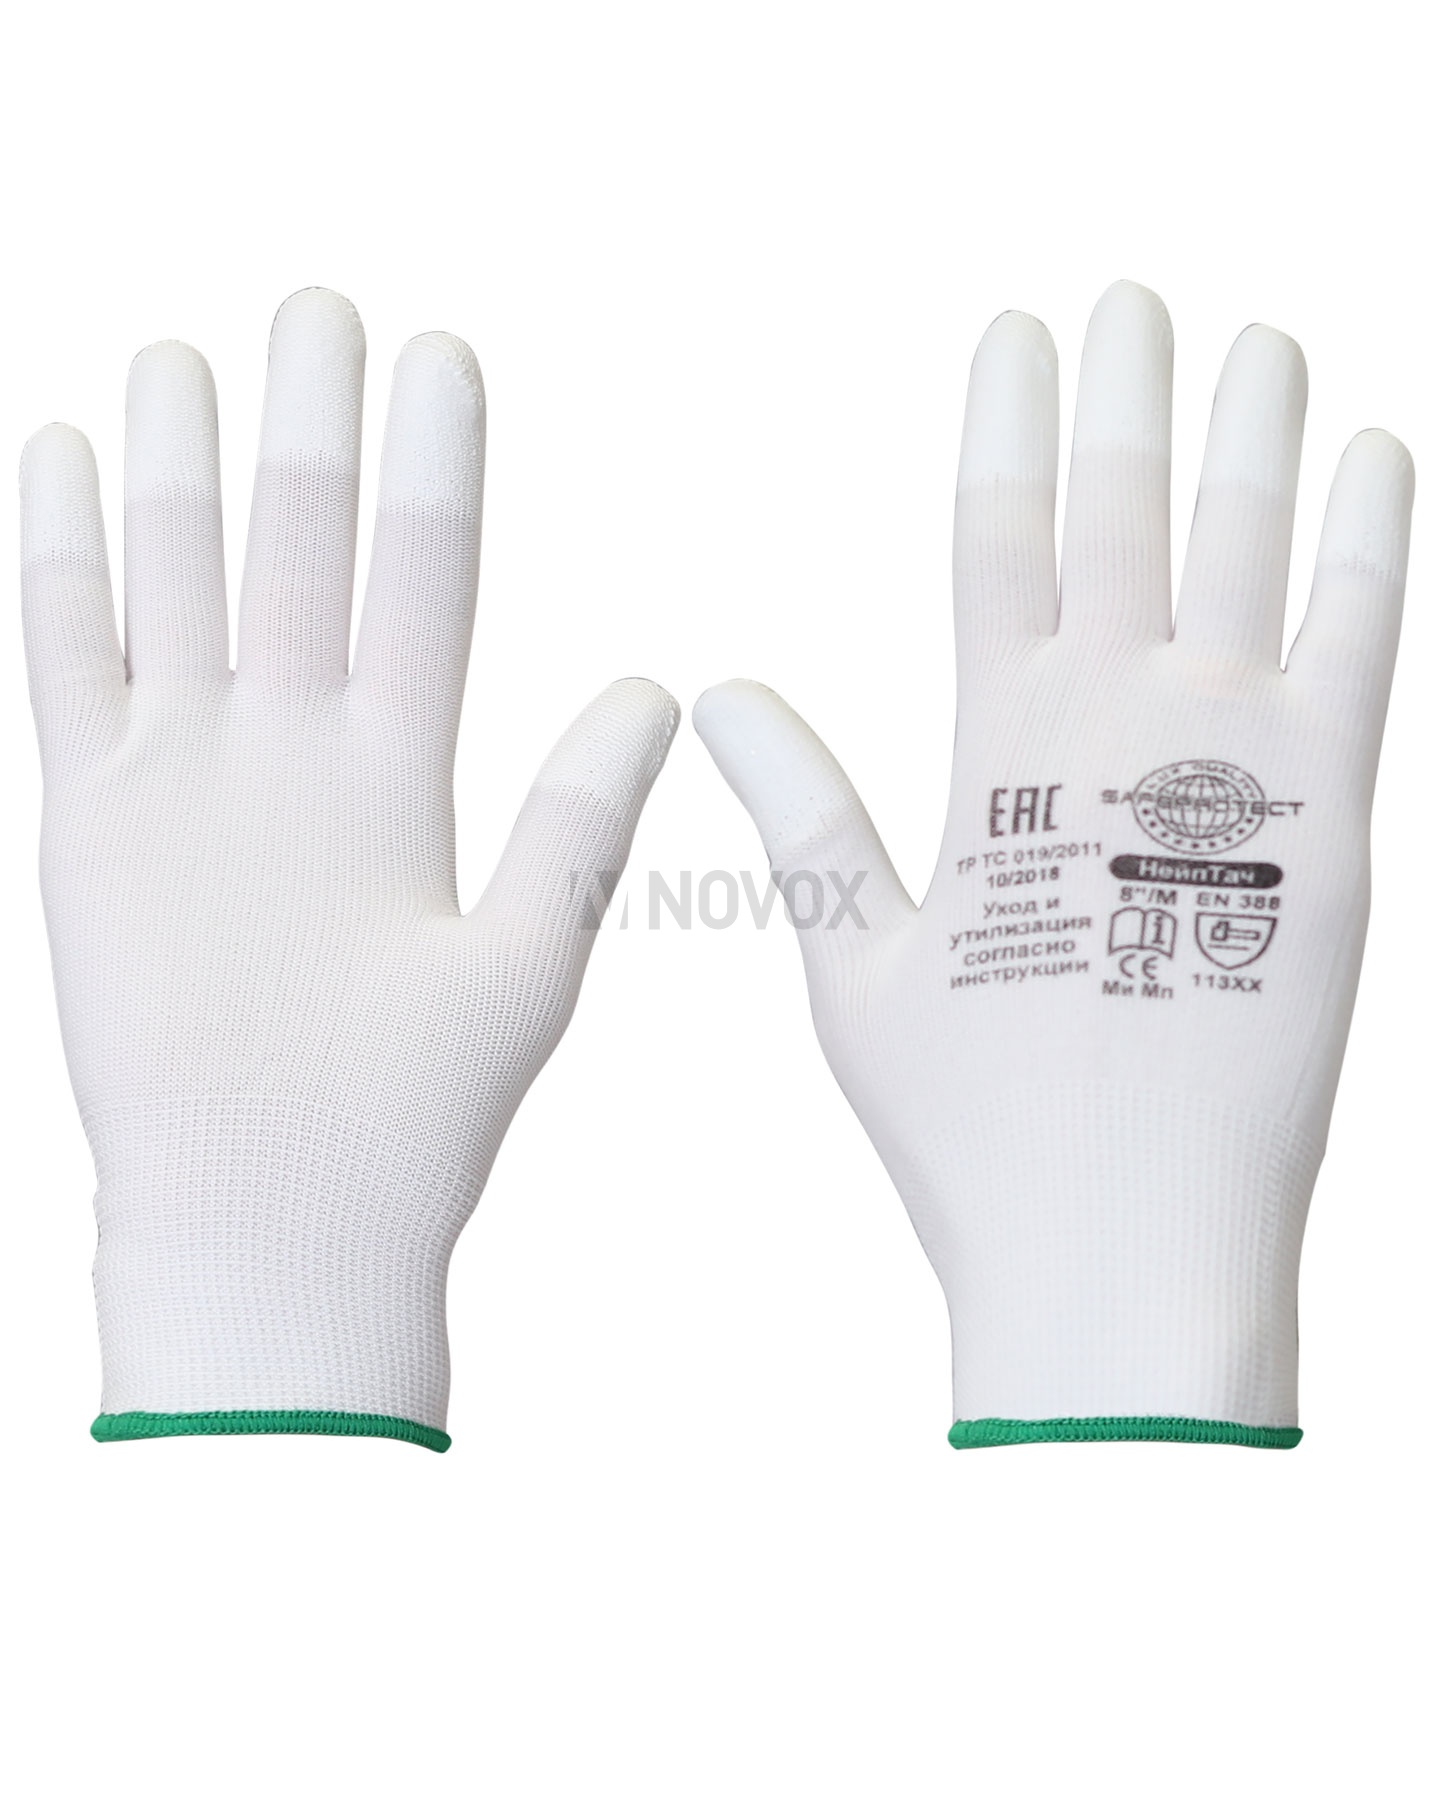 Перчатки Safeprotect НейпТач (нейлон+полиуретан на конч.пальцев, белый)